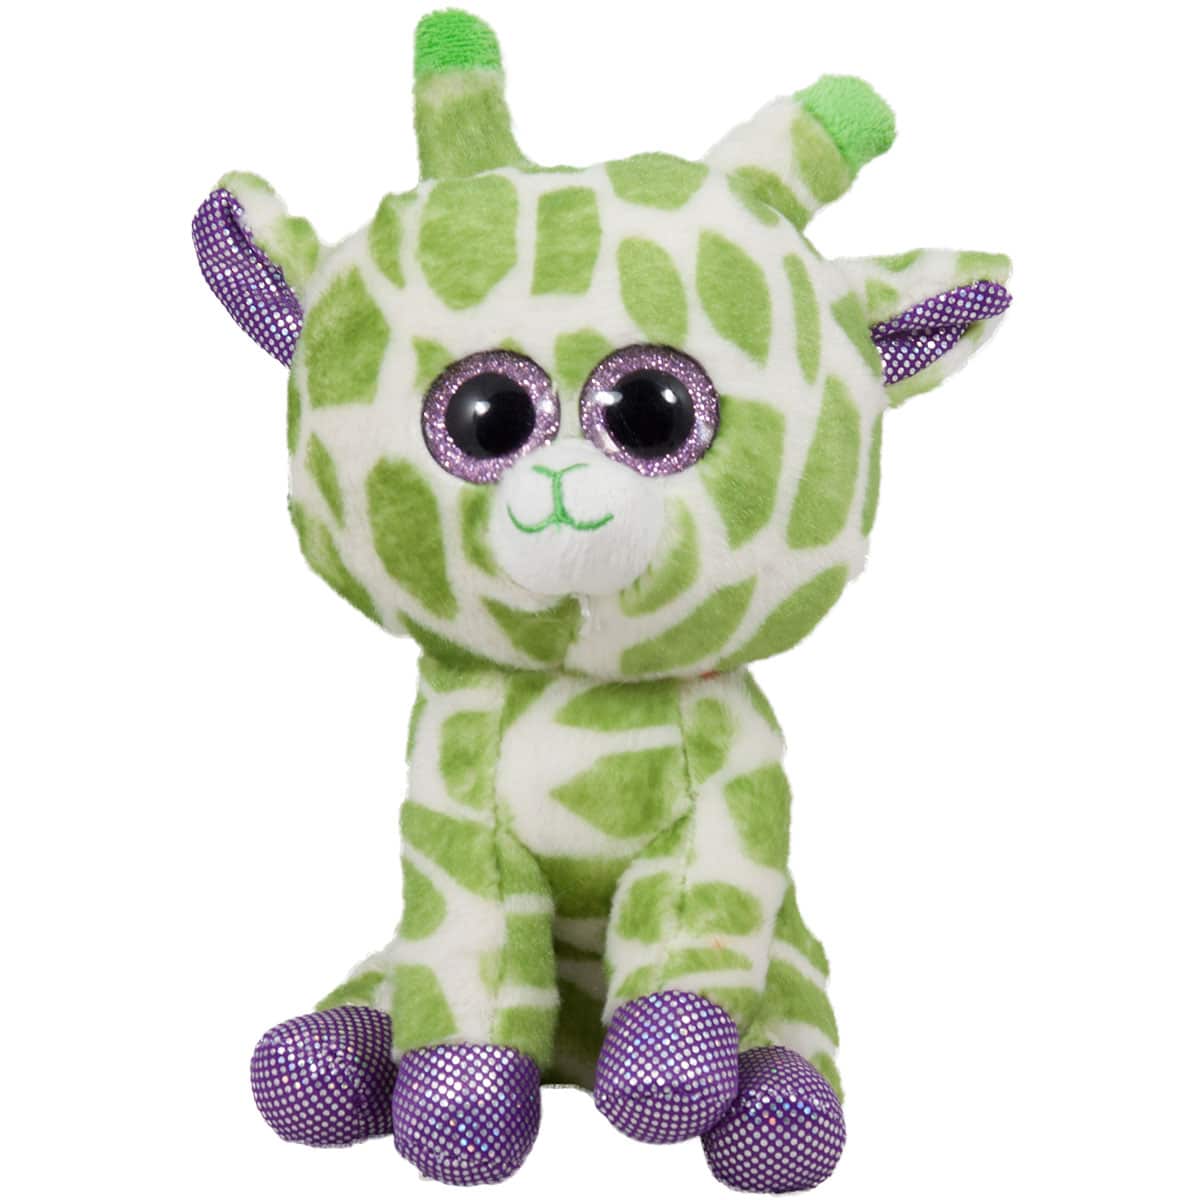 Baby rattle giraffe - Green